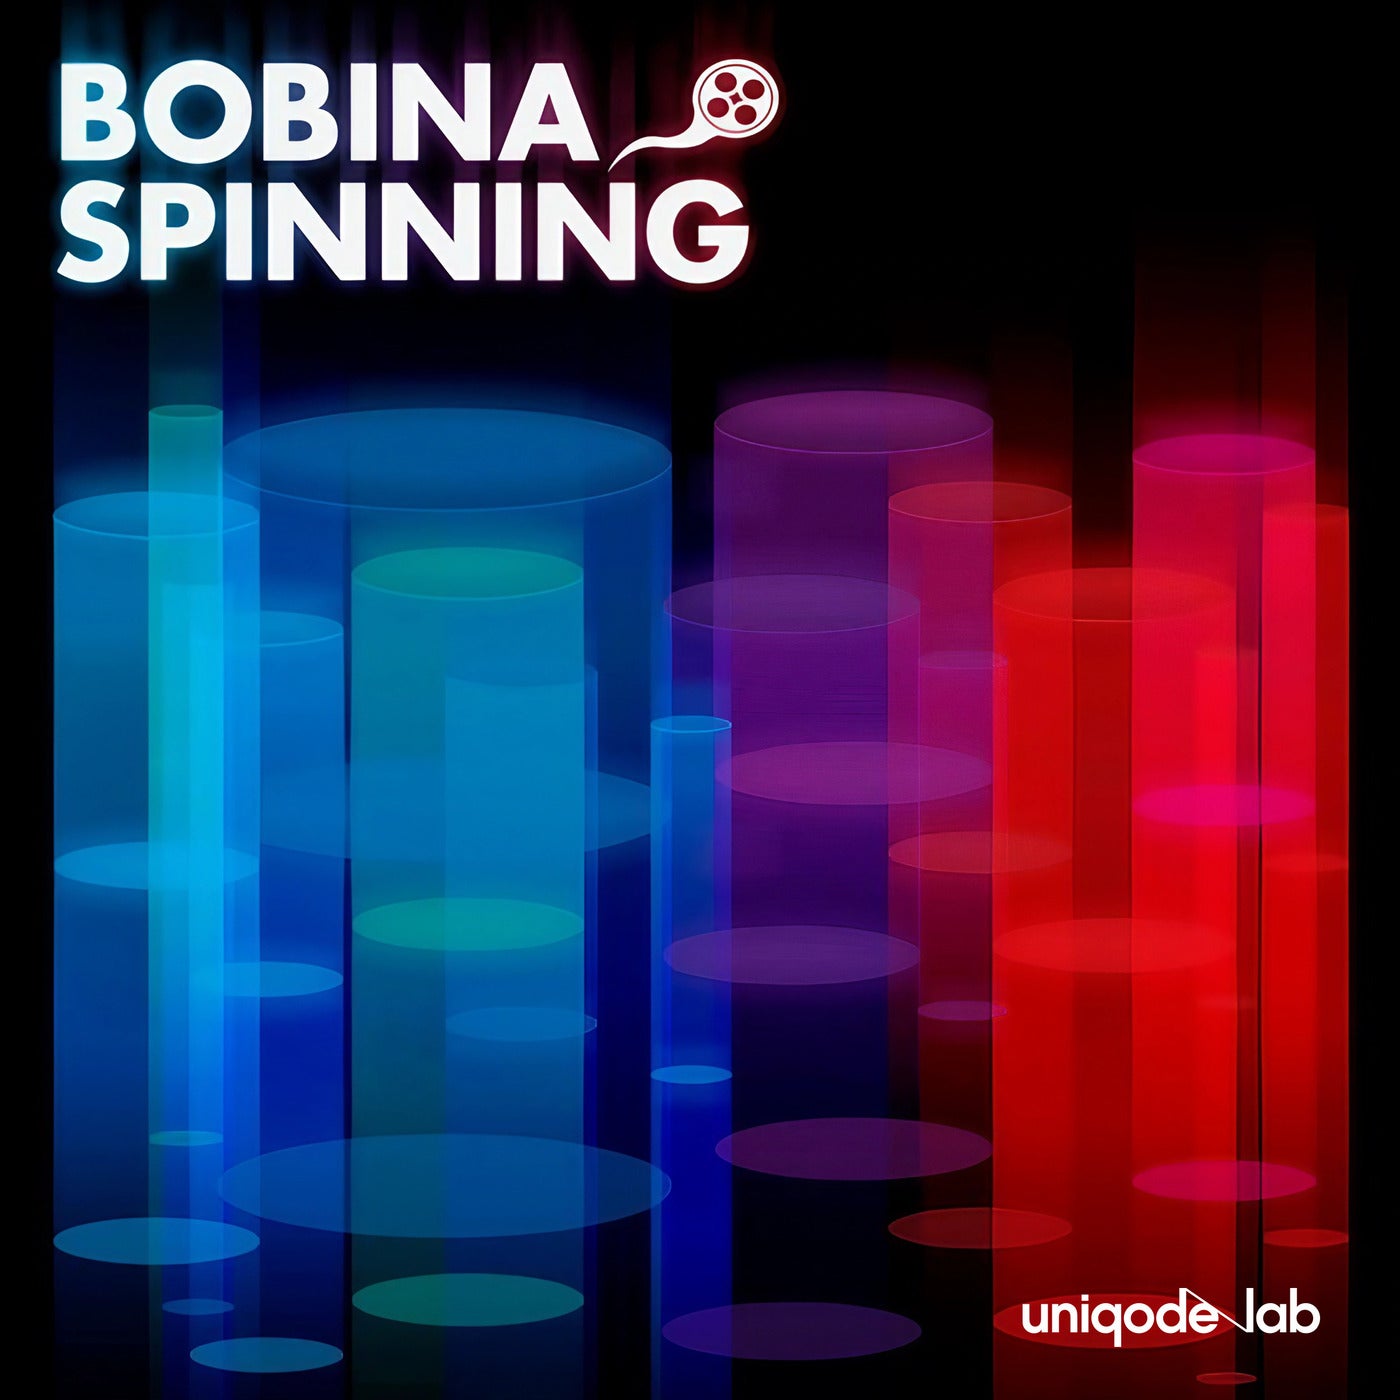 Spinning музыка. Bobina. Again bobina. Bobina альбом. Bobina logo.